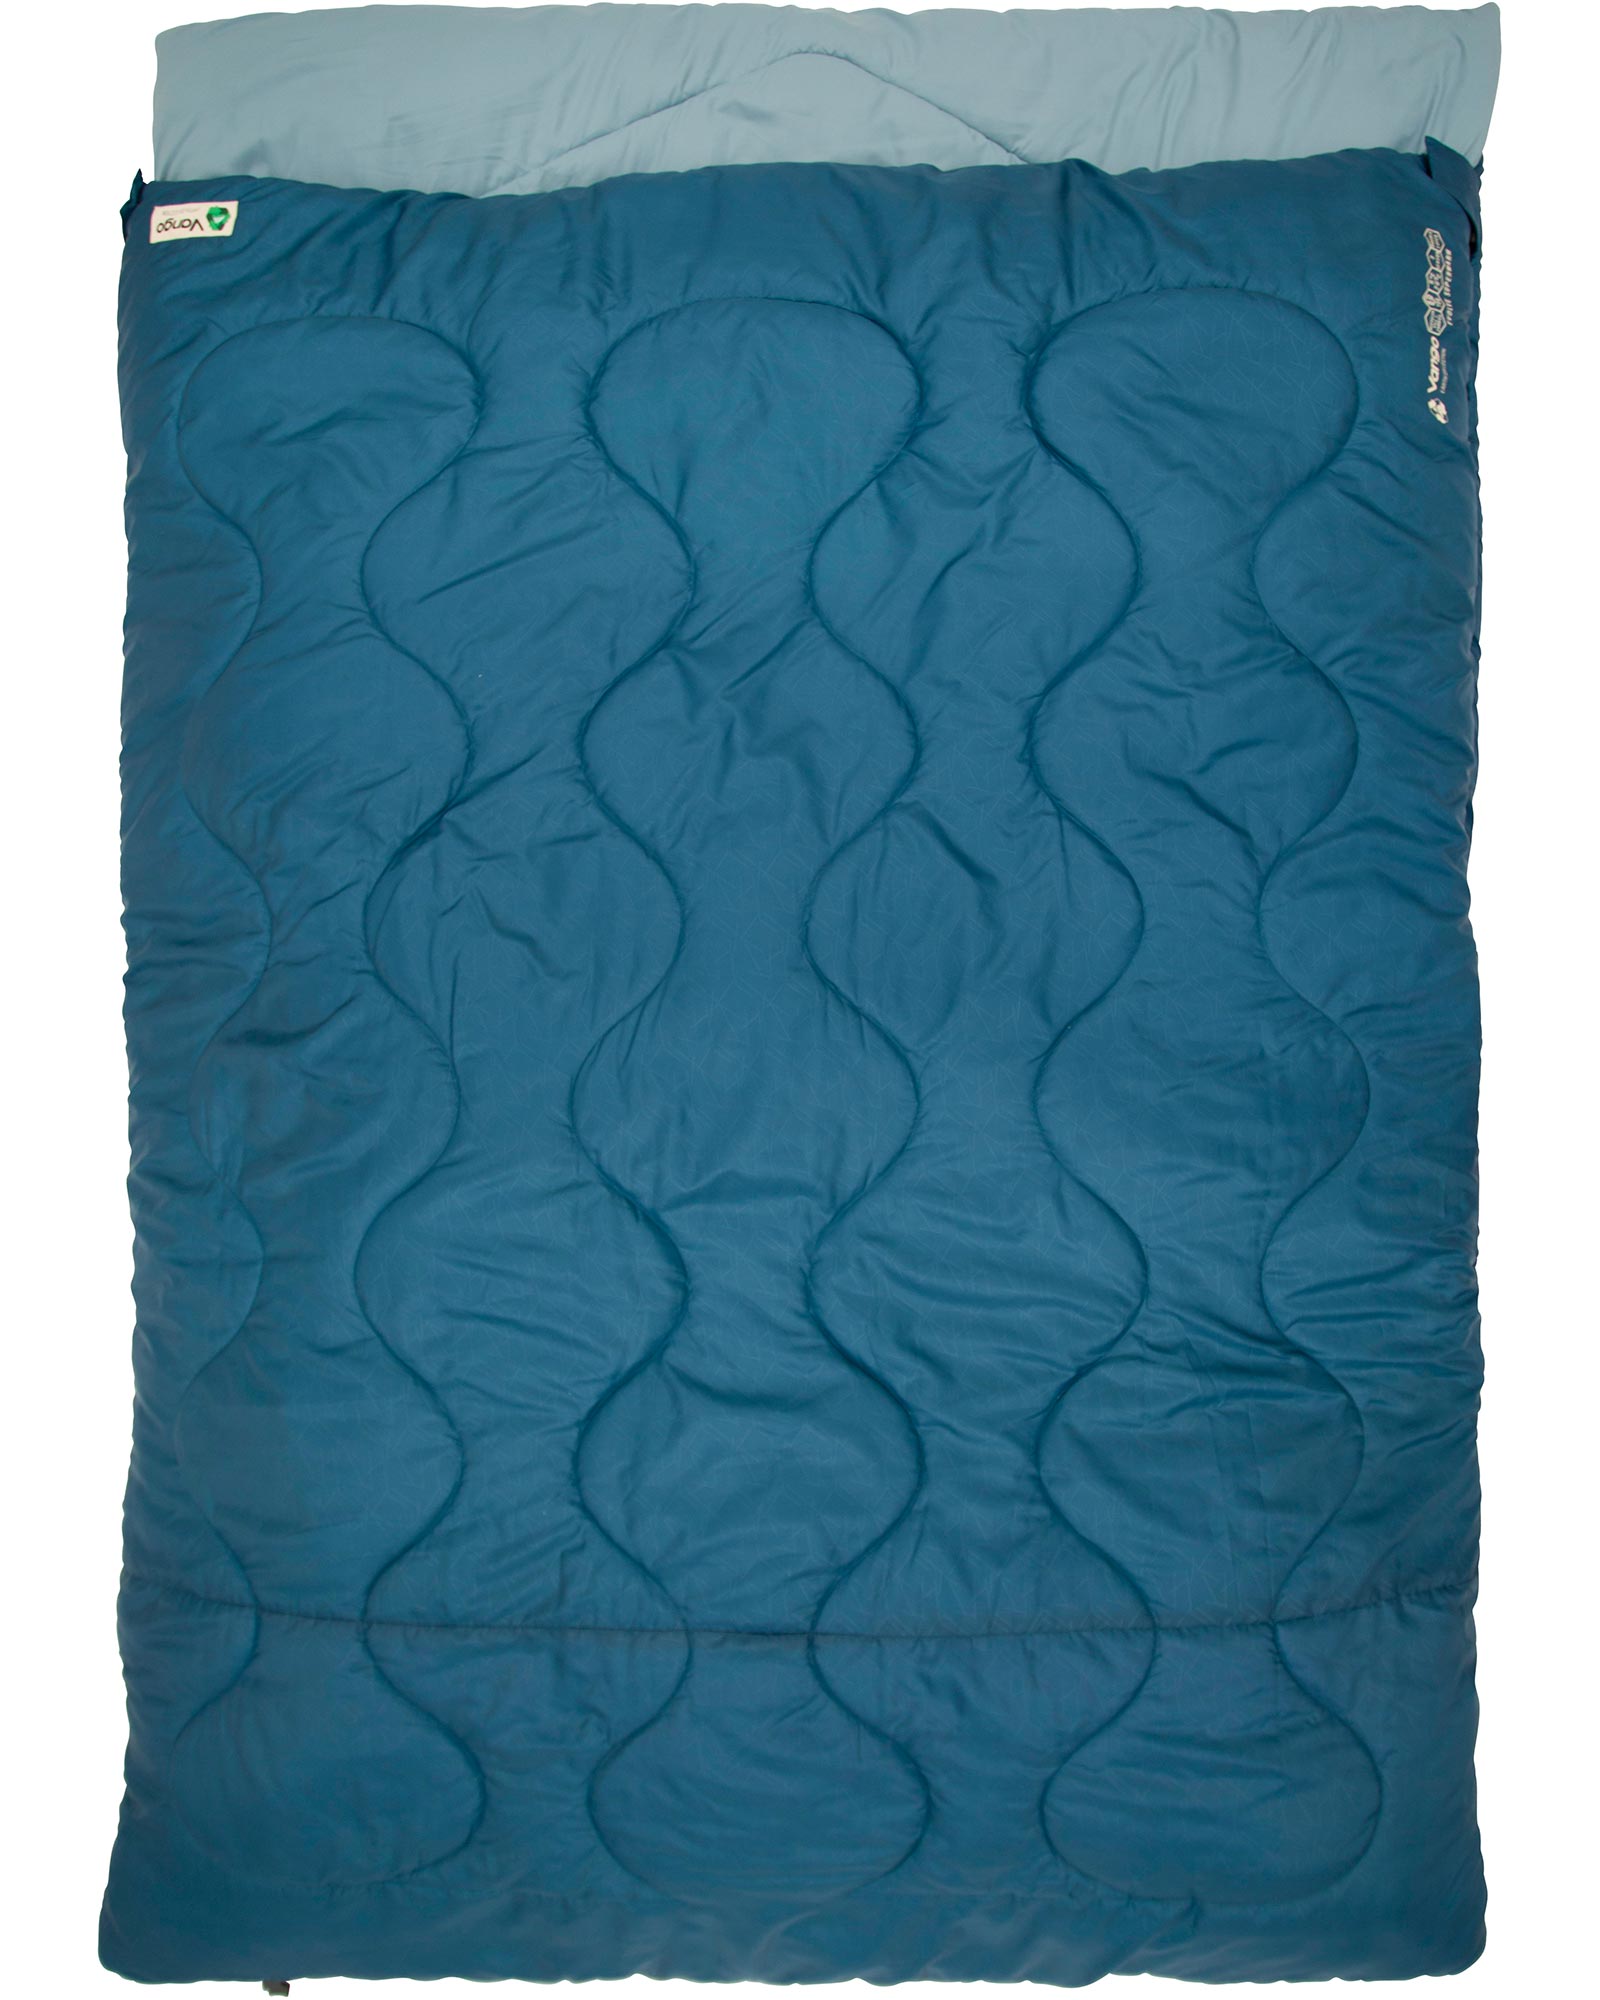 Vango Evolve Superwarm Double Sleeping Bag - Moroccan Blue